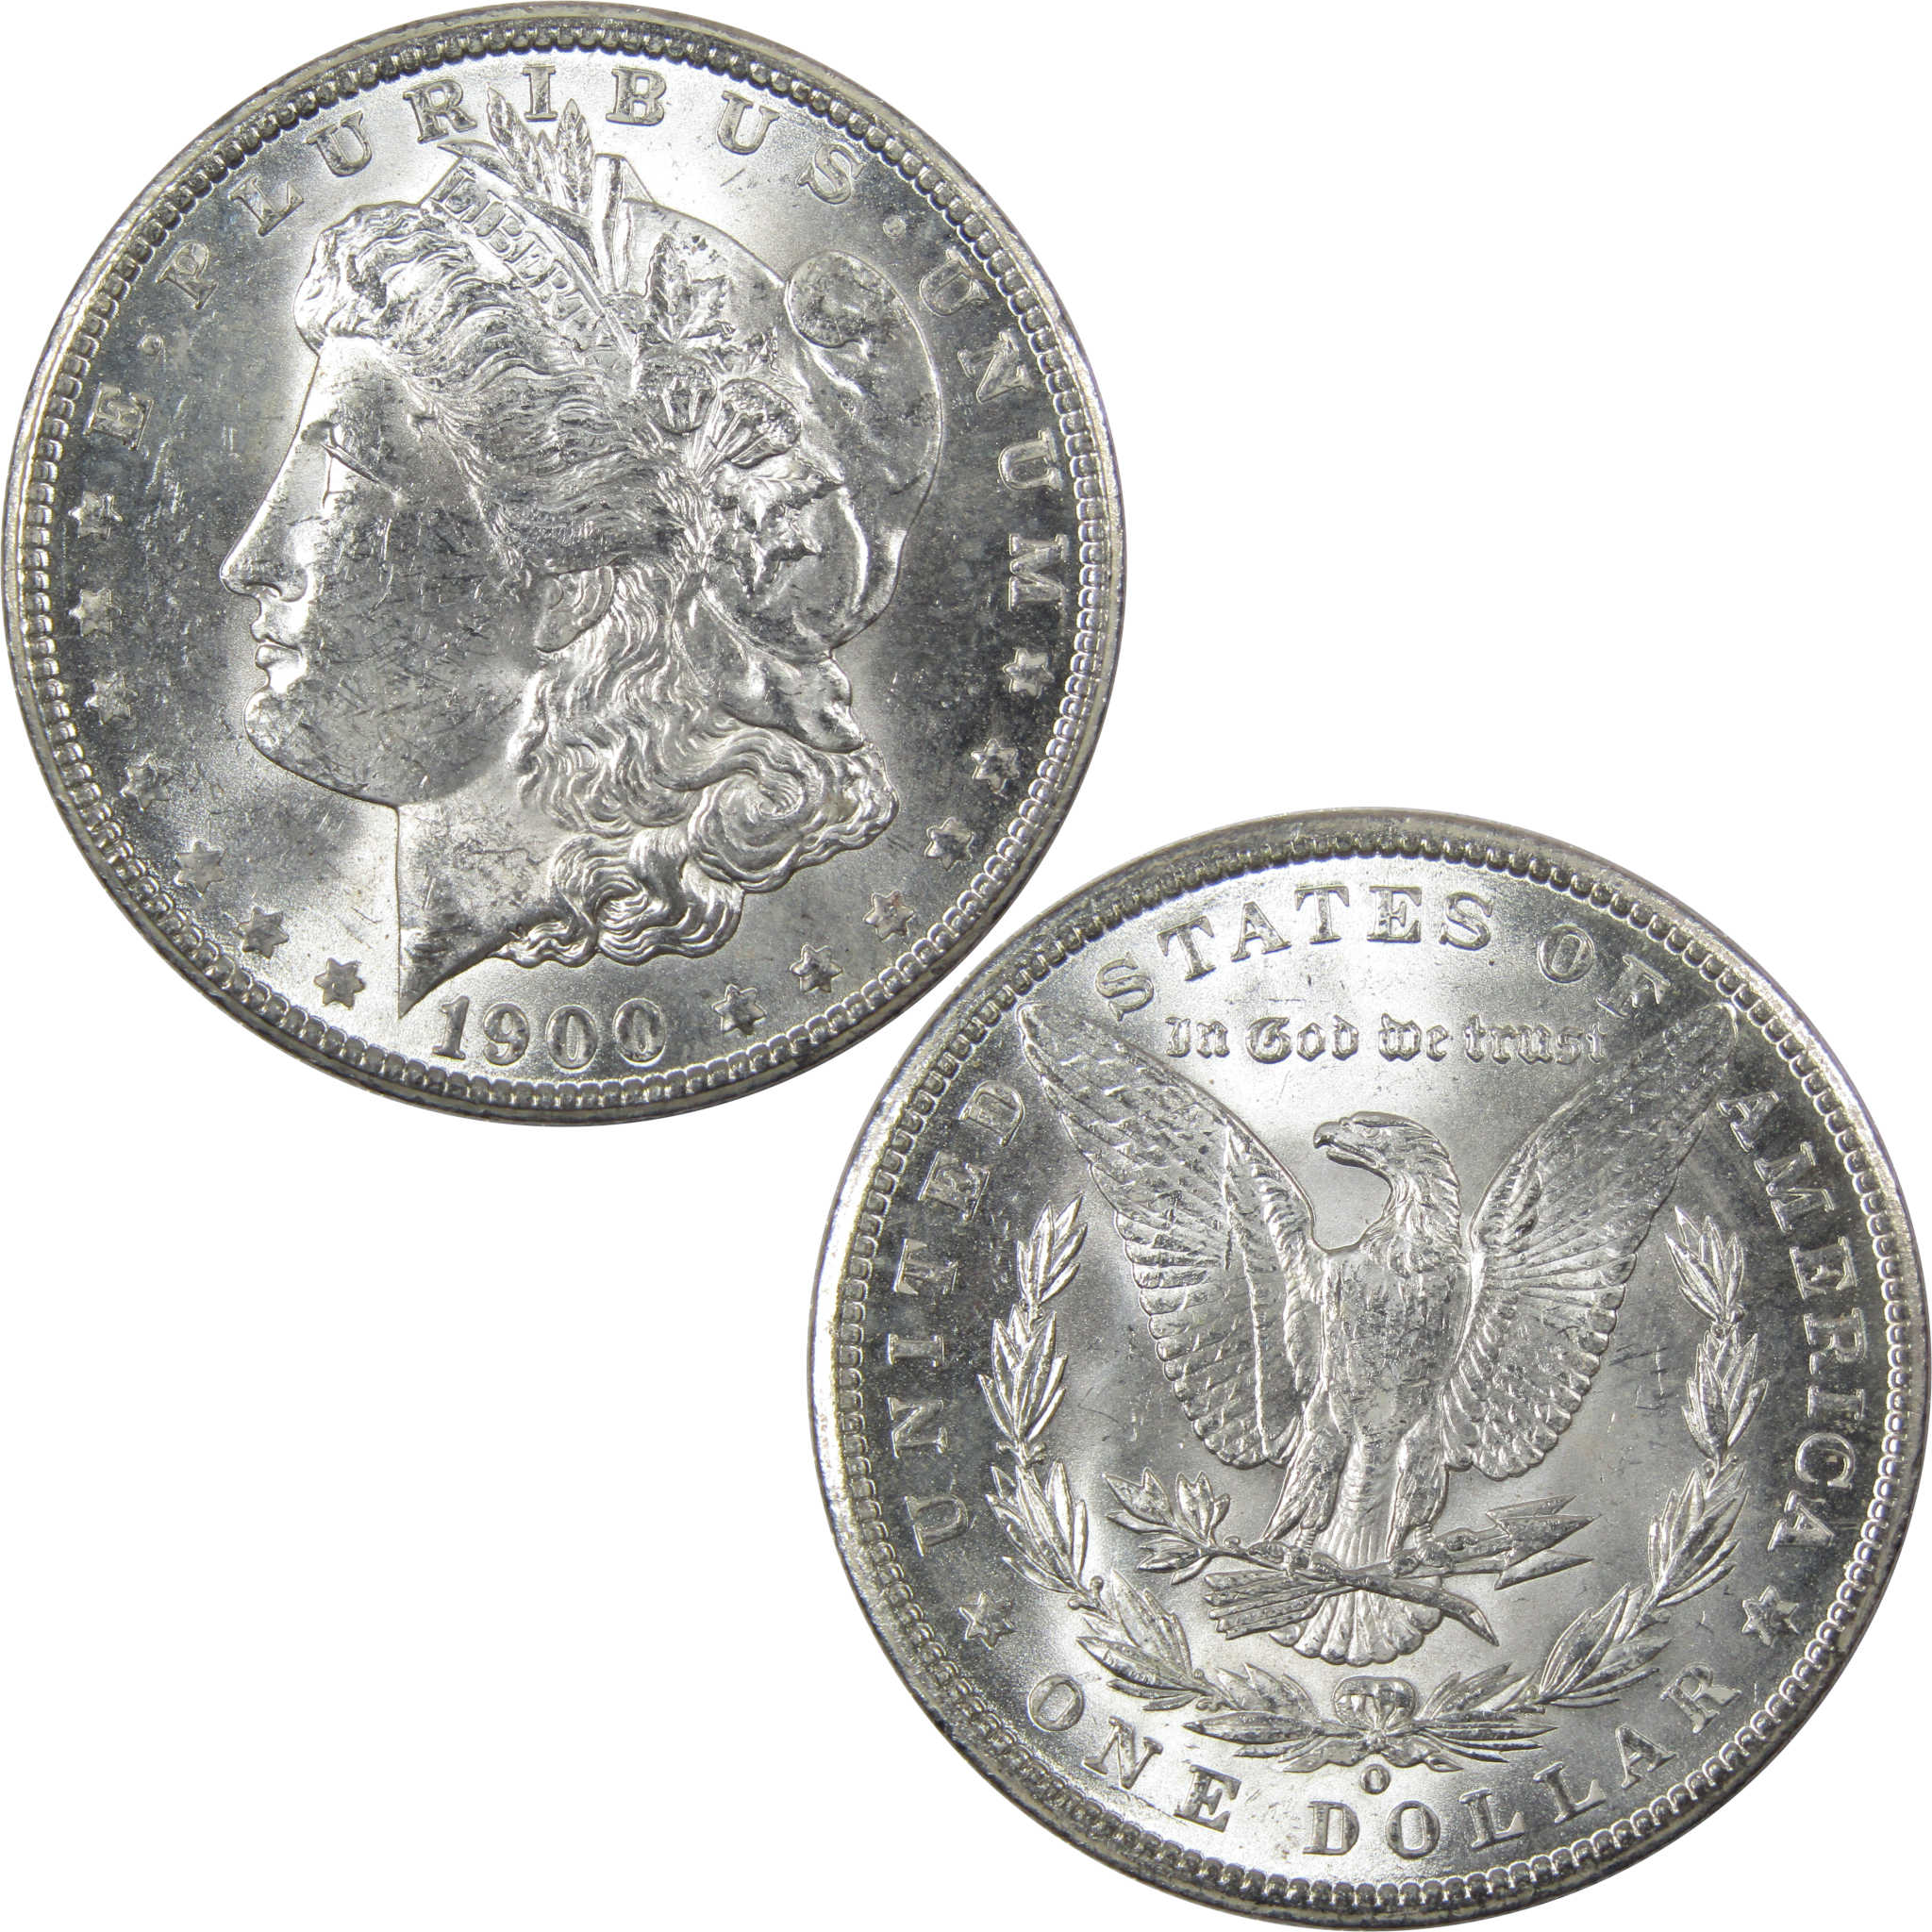 1900 O Morgan Dollar BU Uncirculated Mint State 90% Silver SKU:IPC9726 - Morgan coin - Morgan silver dollar - Morgan silver dollar for sale - Profile Coins &amp; Collectibles